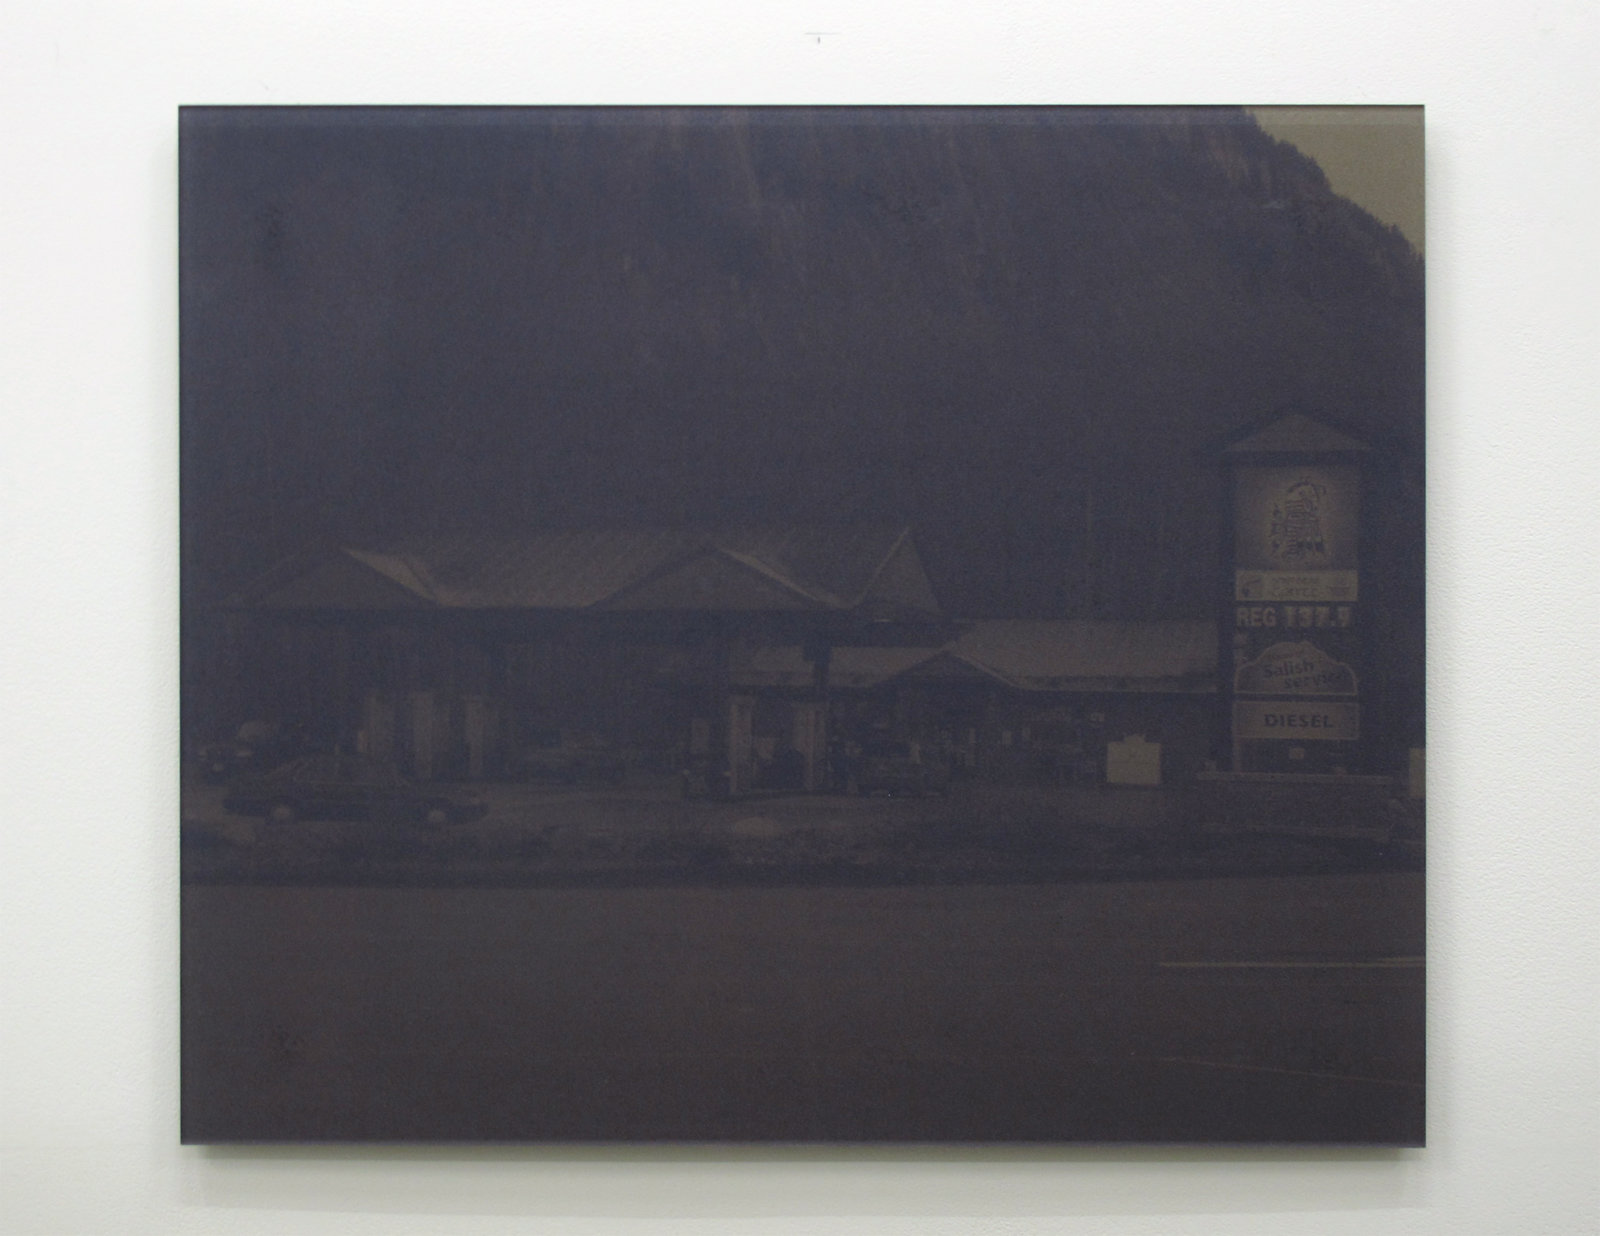 Raymond Boisjoly, Rez Gas (9001 Valley Dr, Squamish, BC, V0N 1T0), 2013, sunlight, construction paper, acrylic glass, 30 x 35 in. (75 x 89 cm)